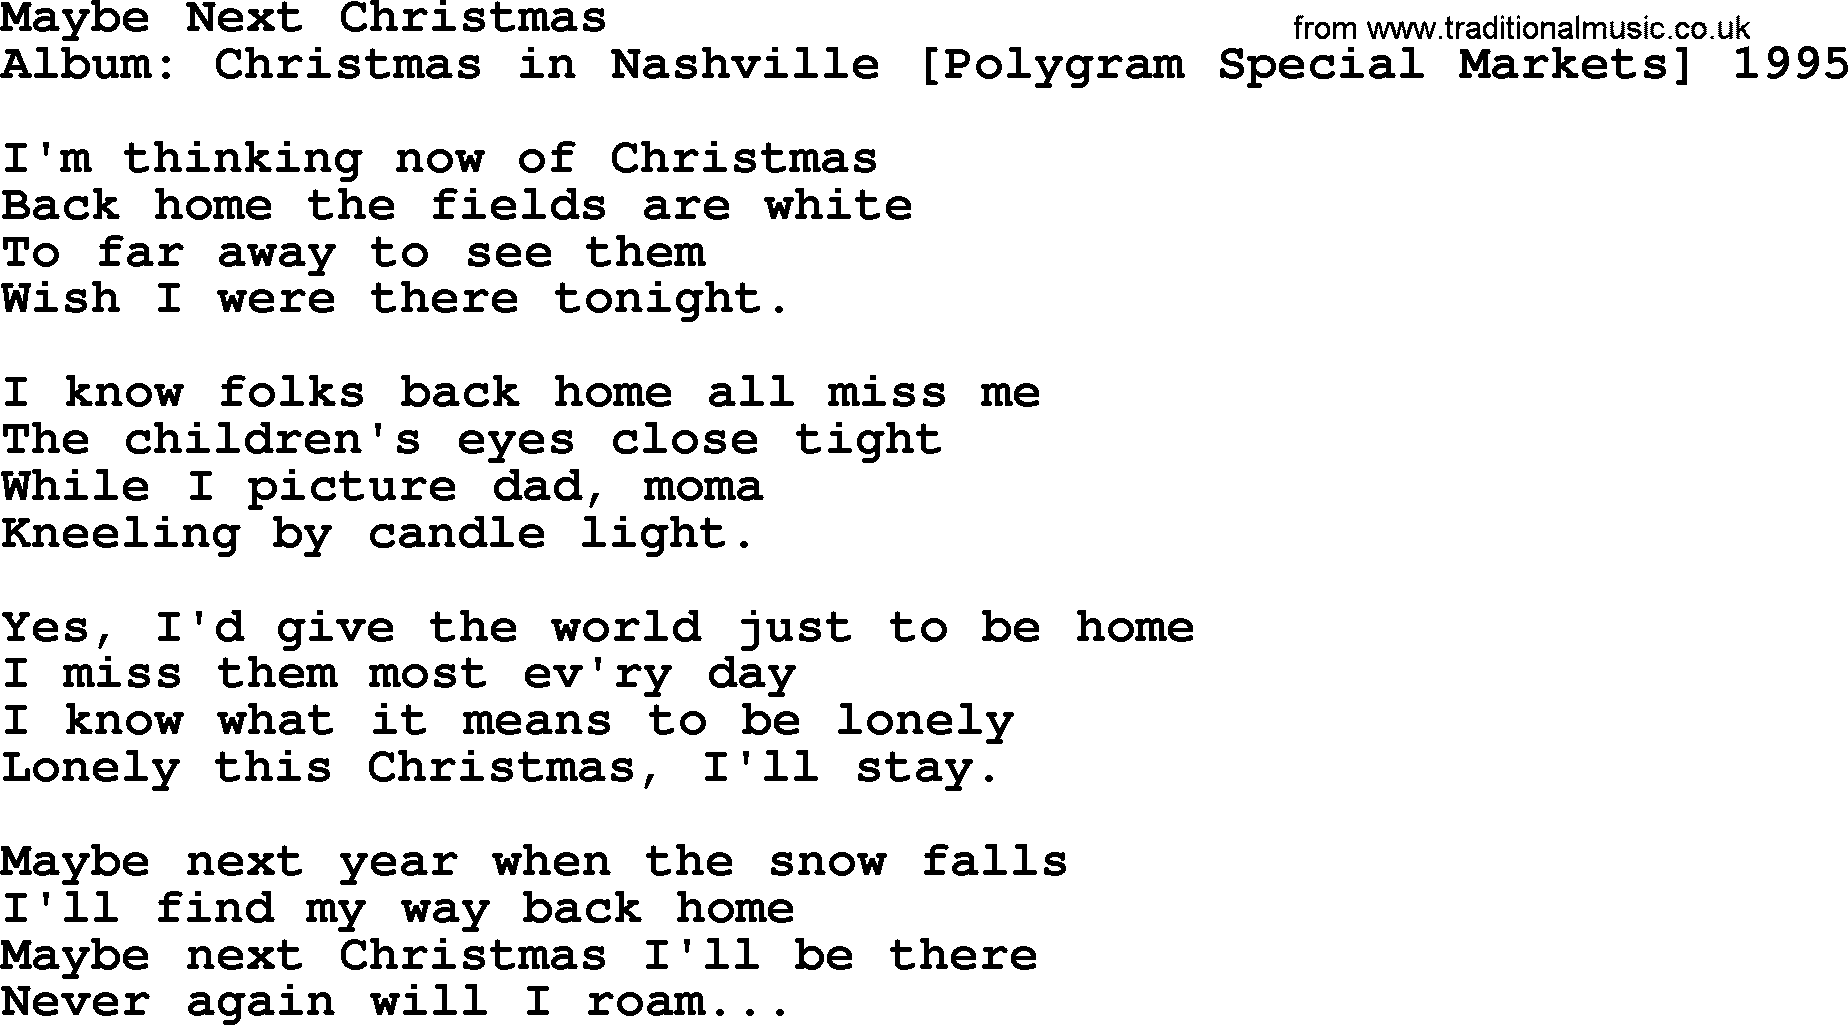 George Jones song: Maybe Next Christmas, lyrics